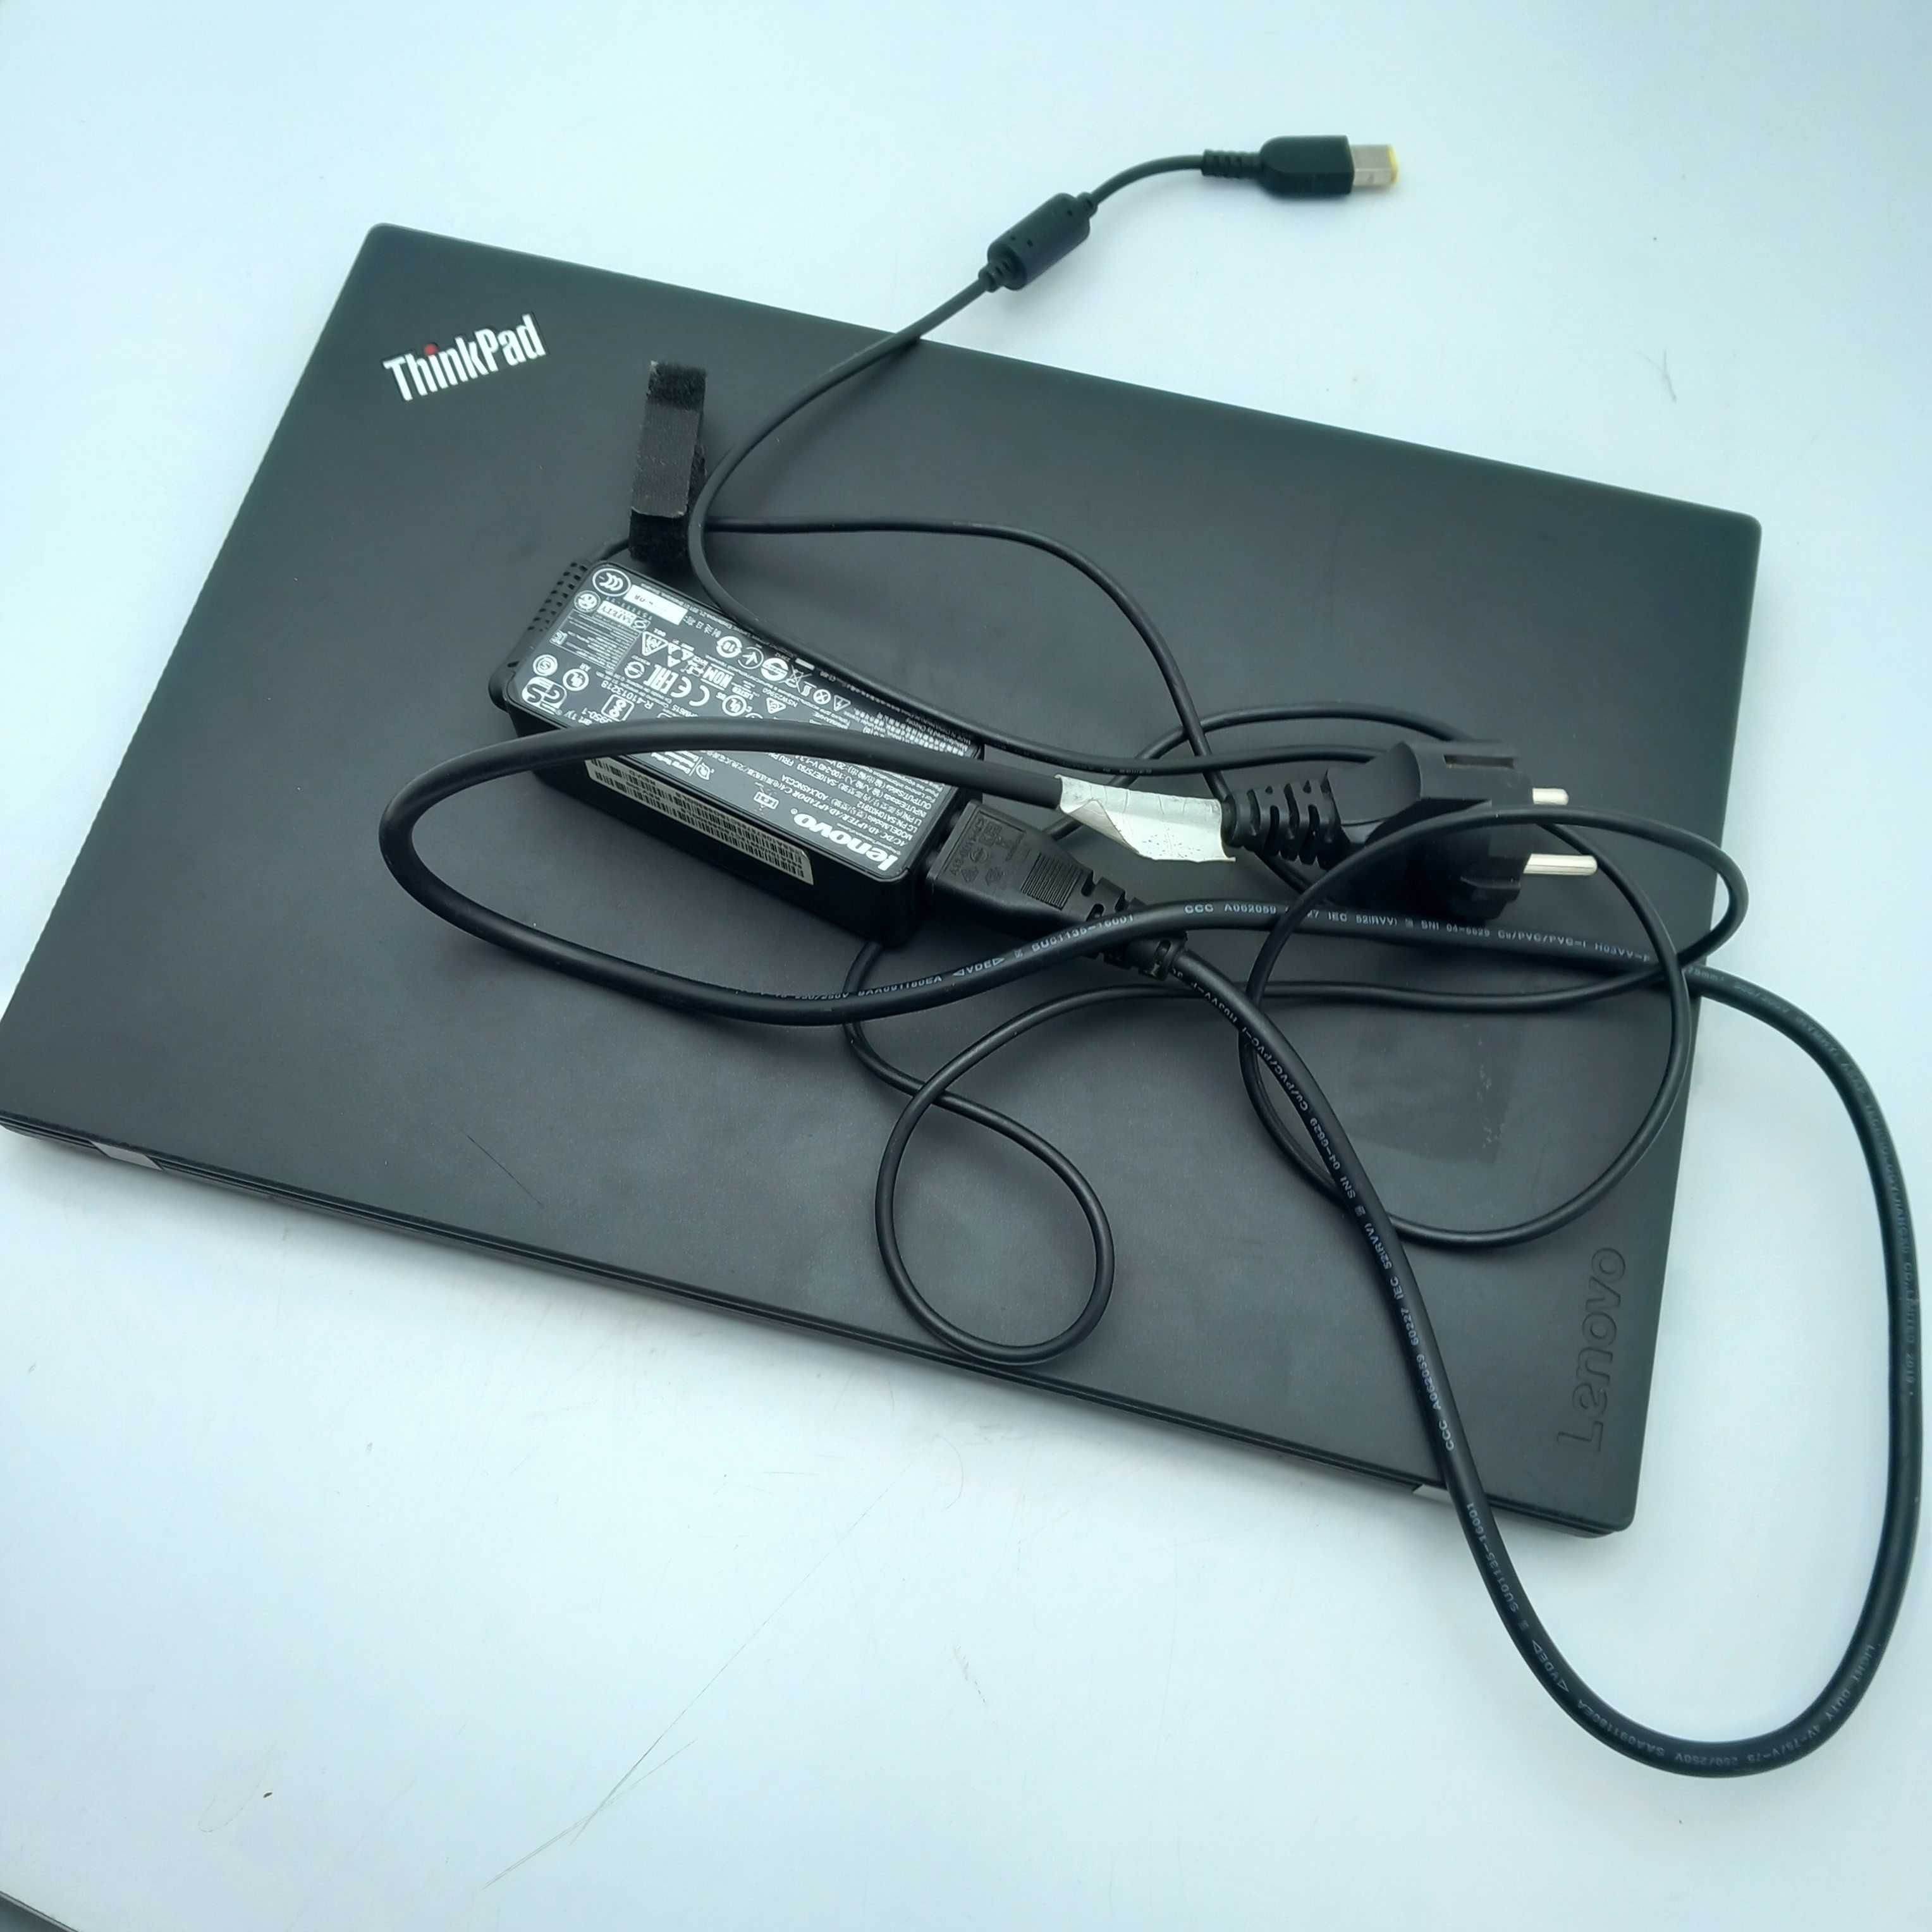 Laptop Lenovo ThinkPad T470 i5-6200U 14 " Intel Core i5 8 GB / 256 GB